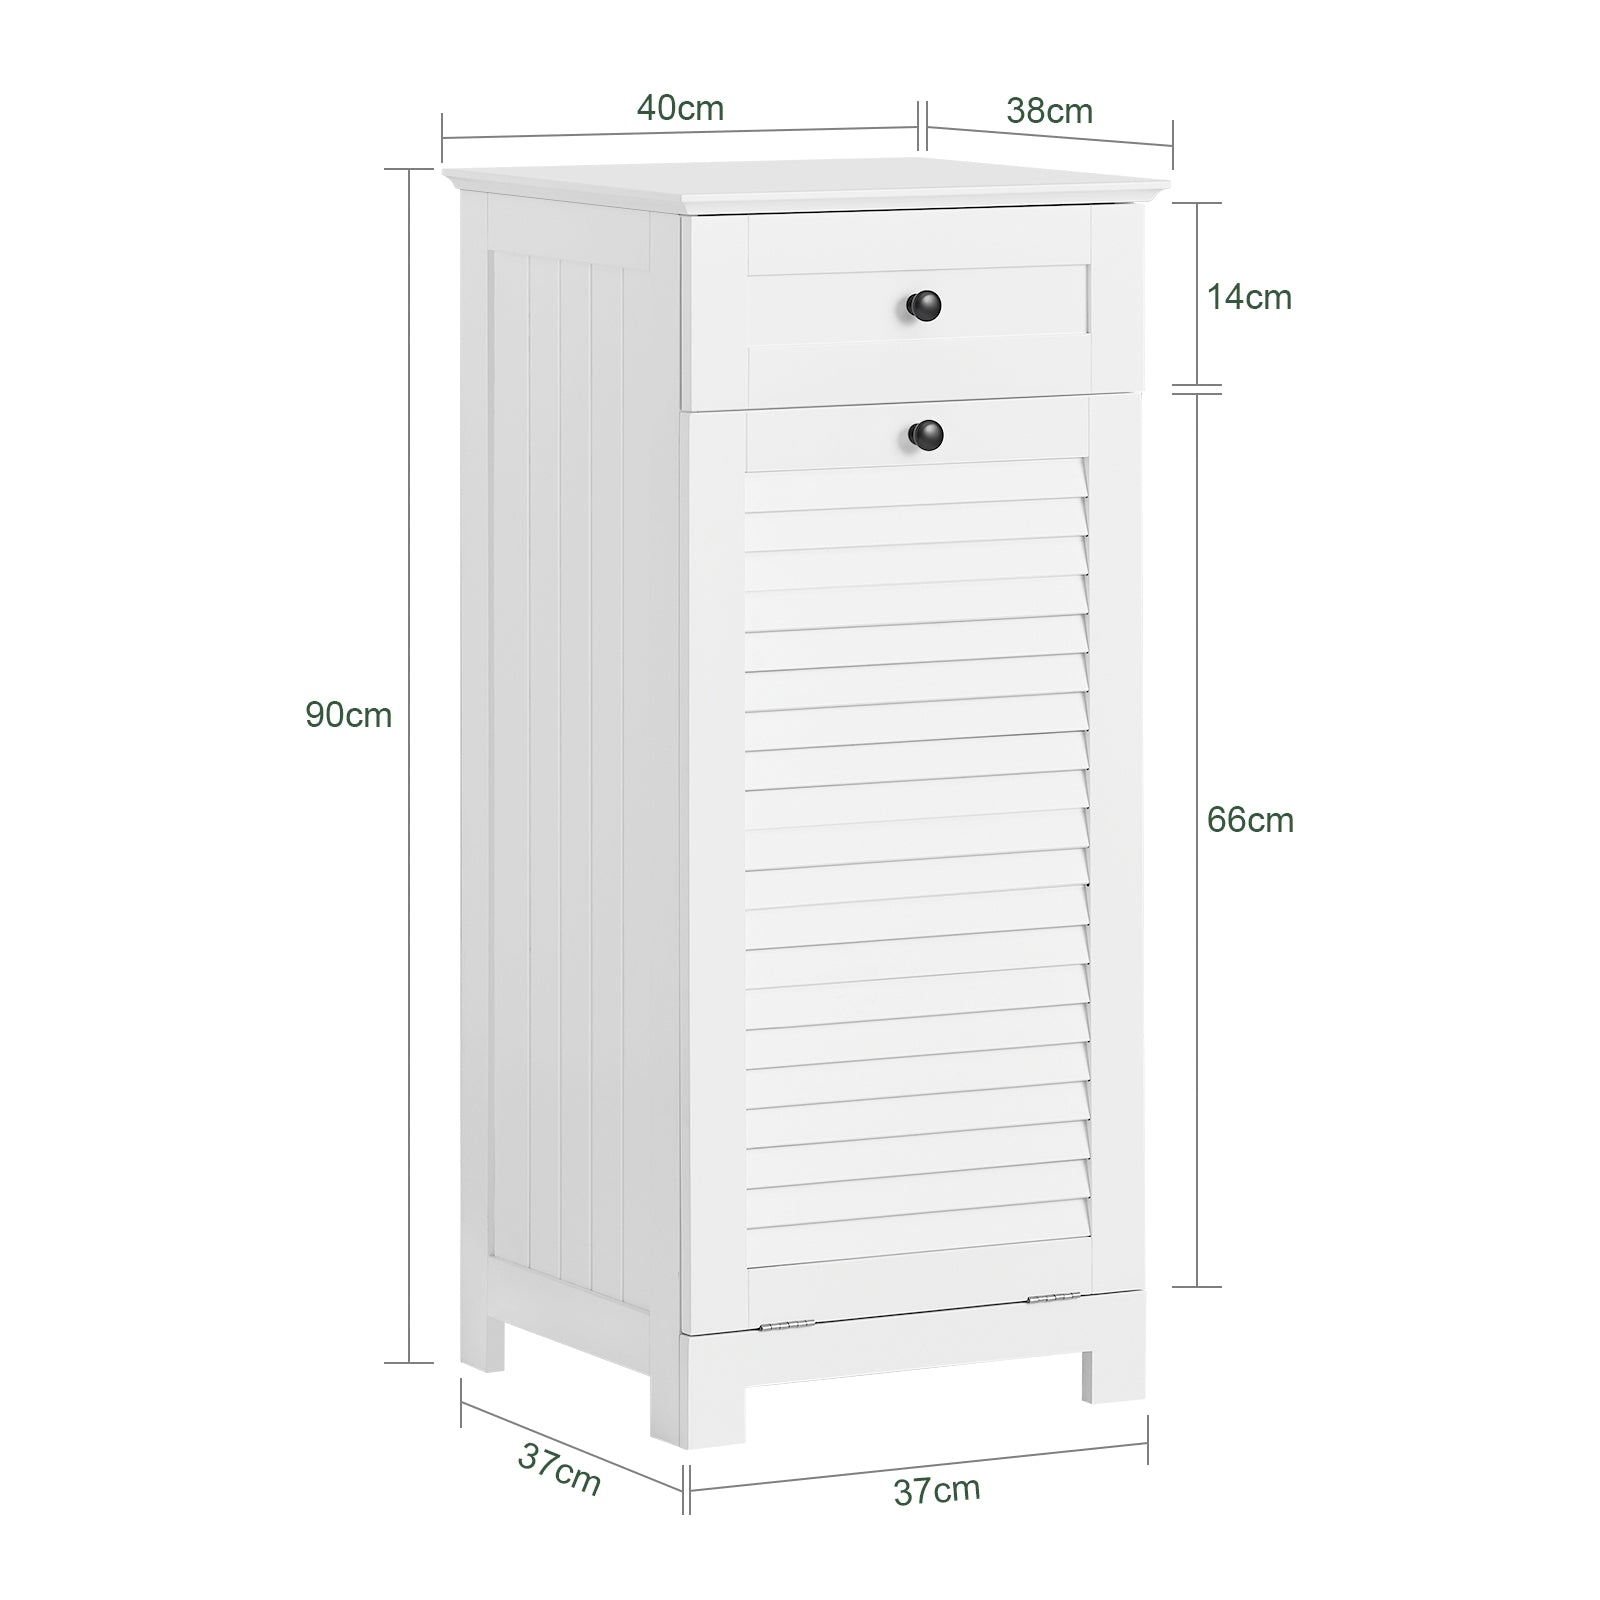 SoBuy BZR73-W,Bathroom Storage Cabinet Unit with Drawer&Laundry Basket,Laundry Cabinet White